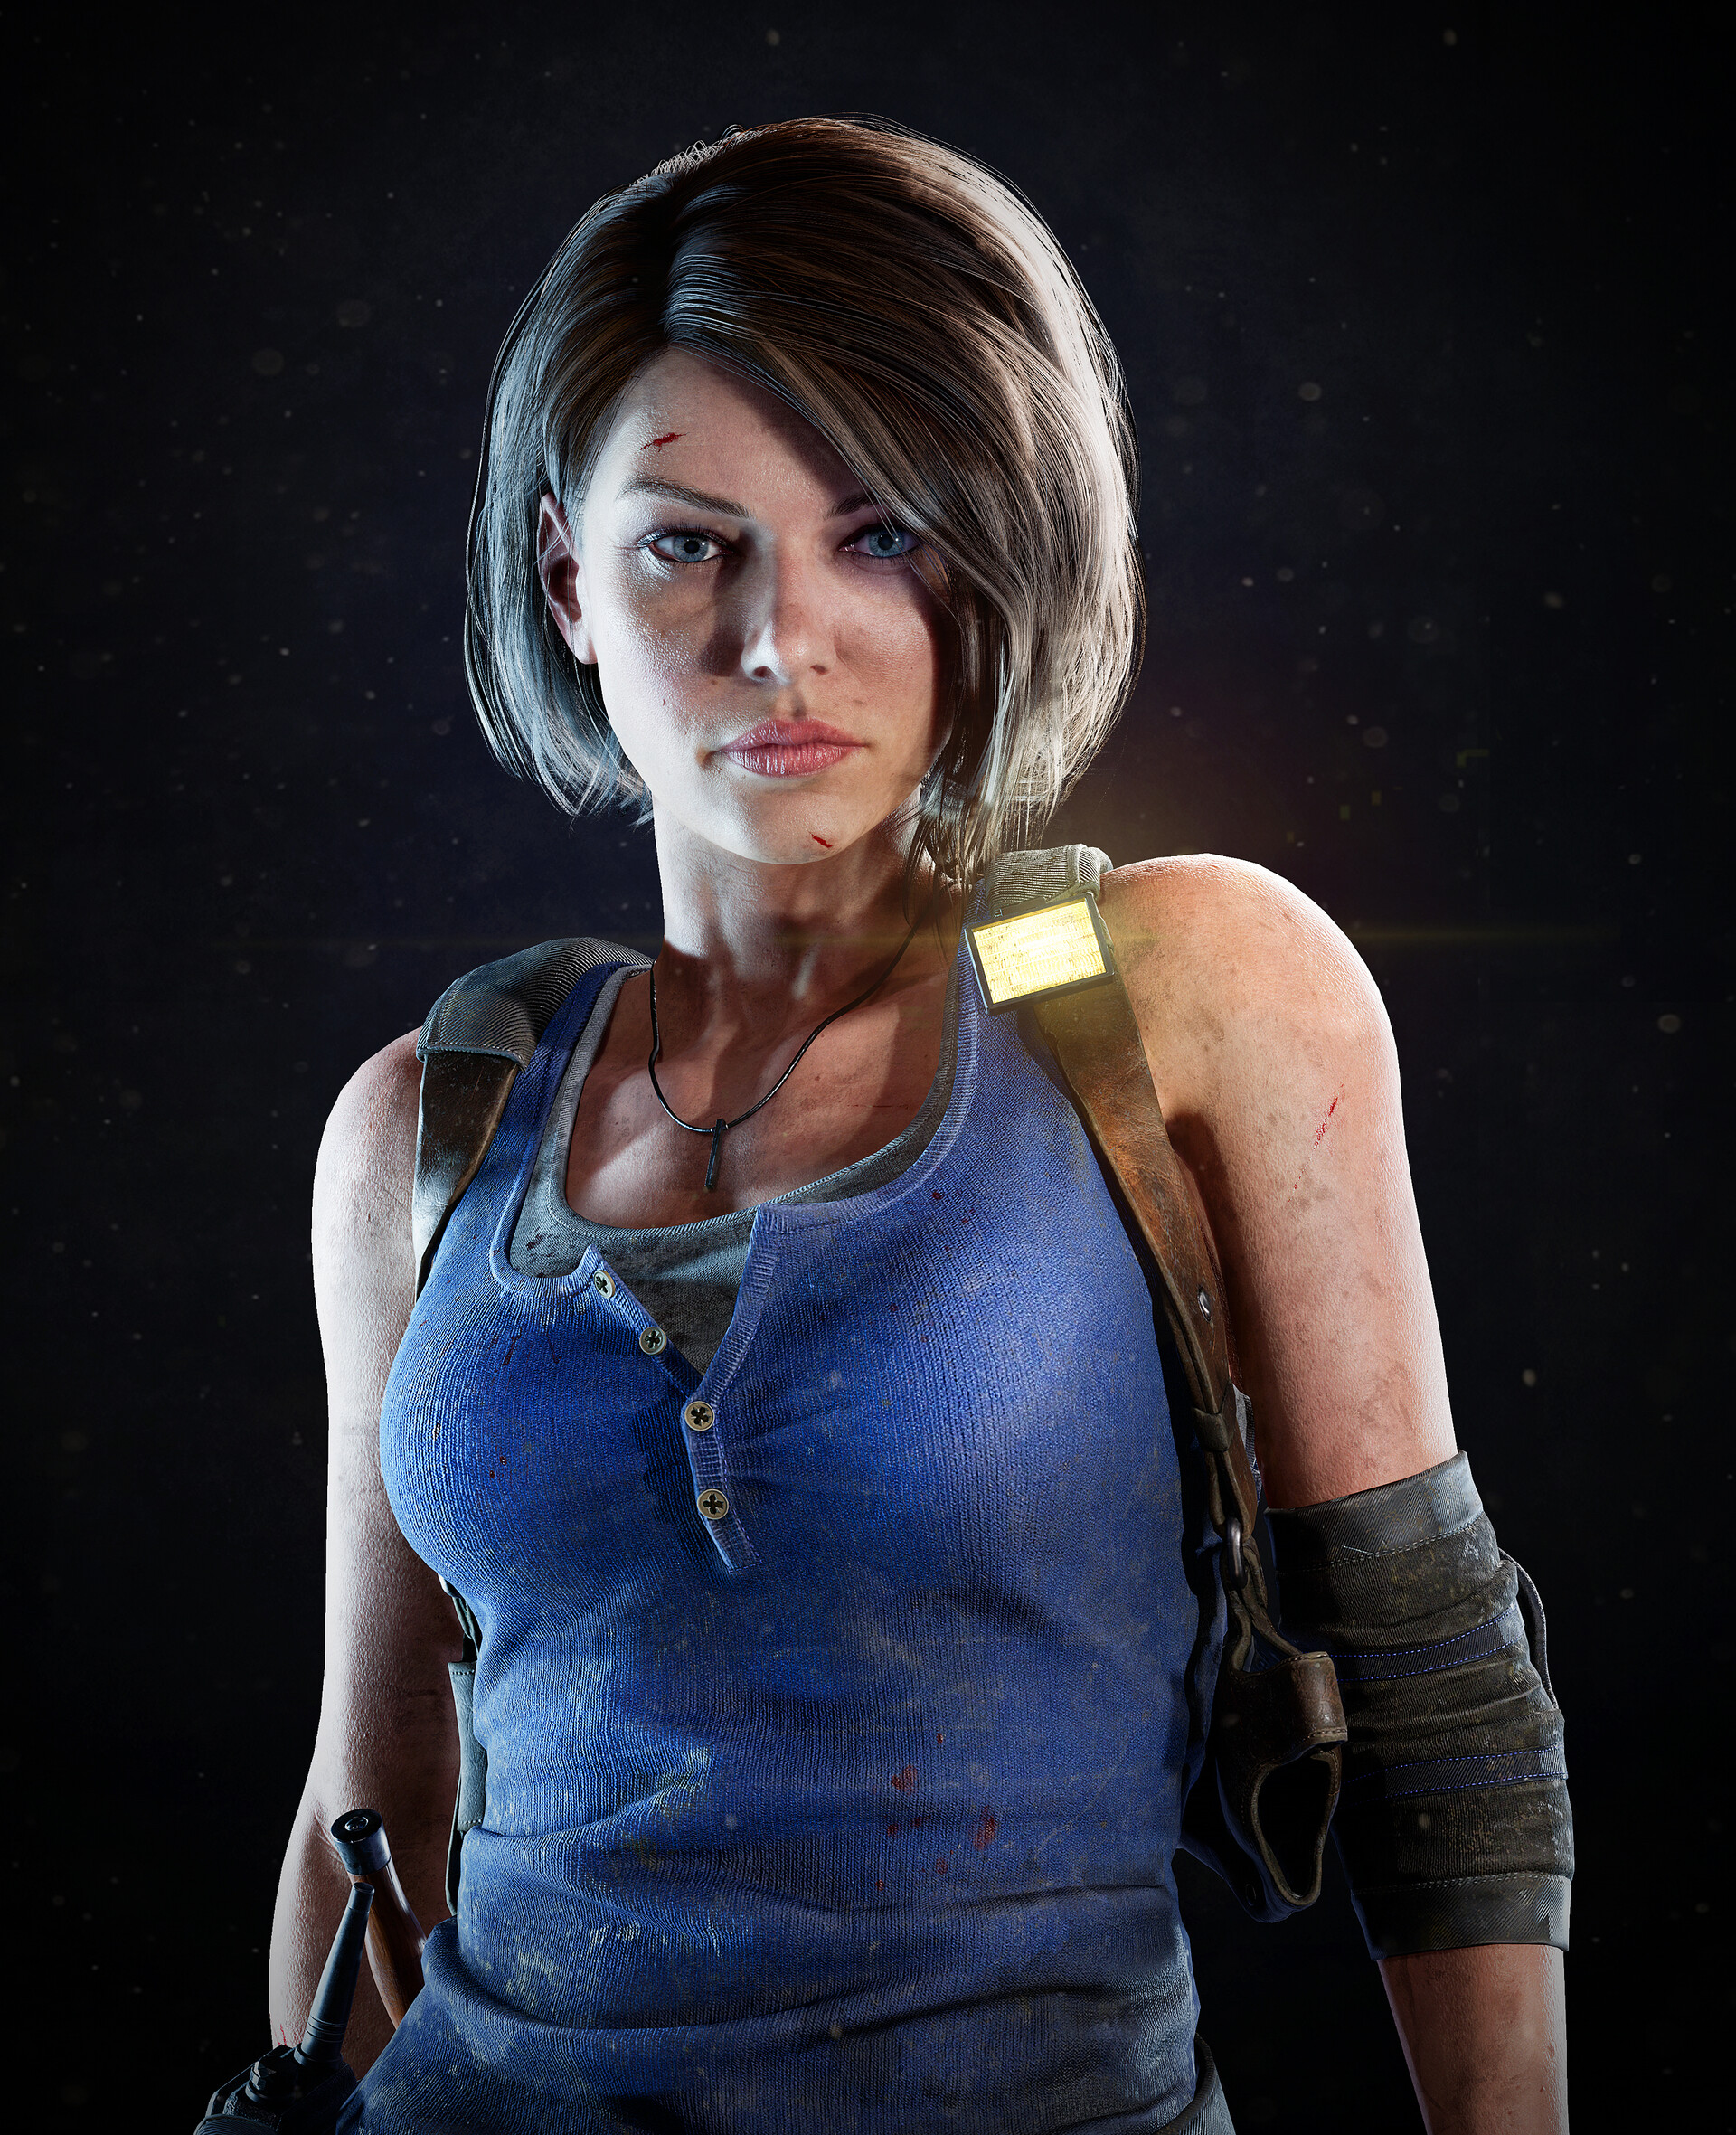  Jill Valentine - Resident Evil